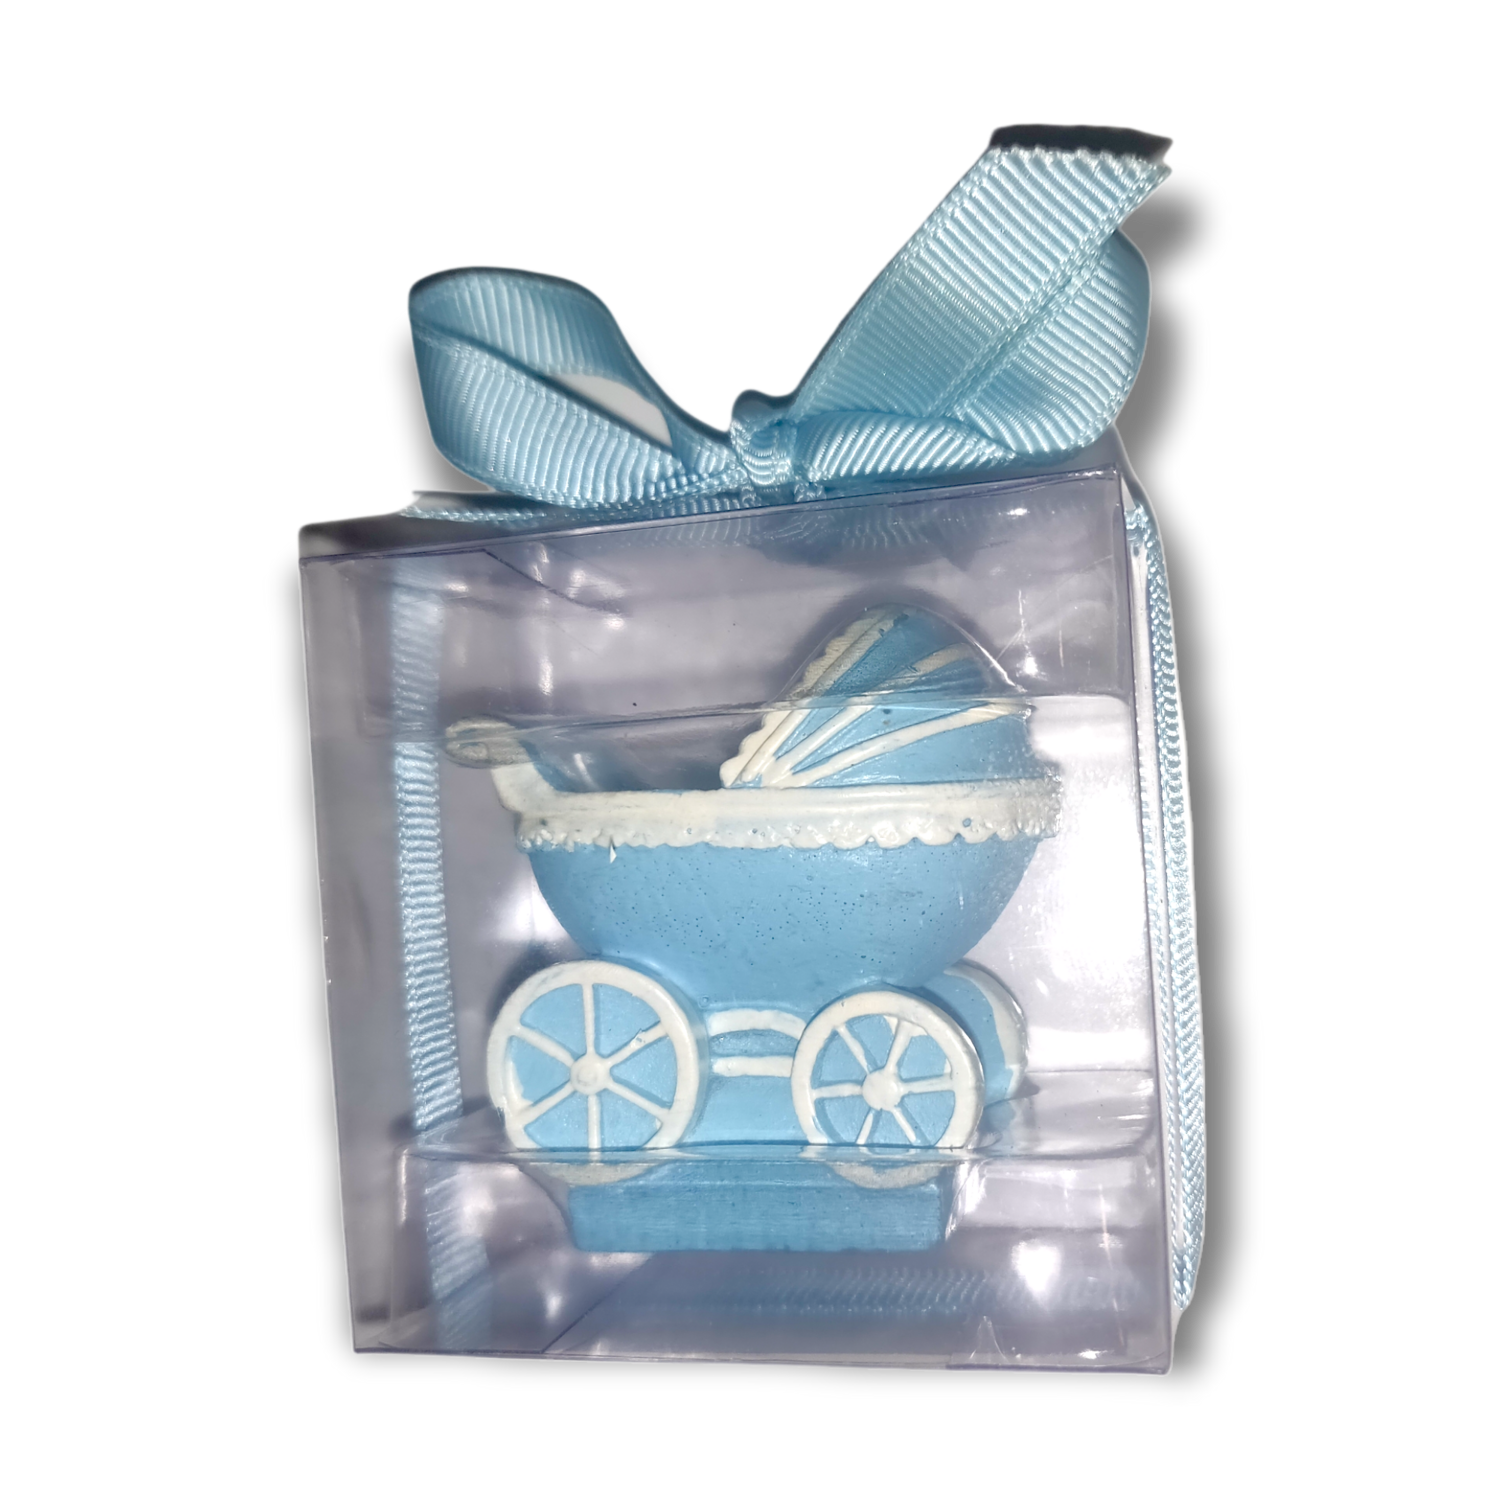 Blue Baby Pram Mini Cake Candle with box & Ribbon!